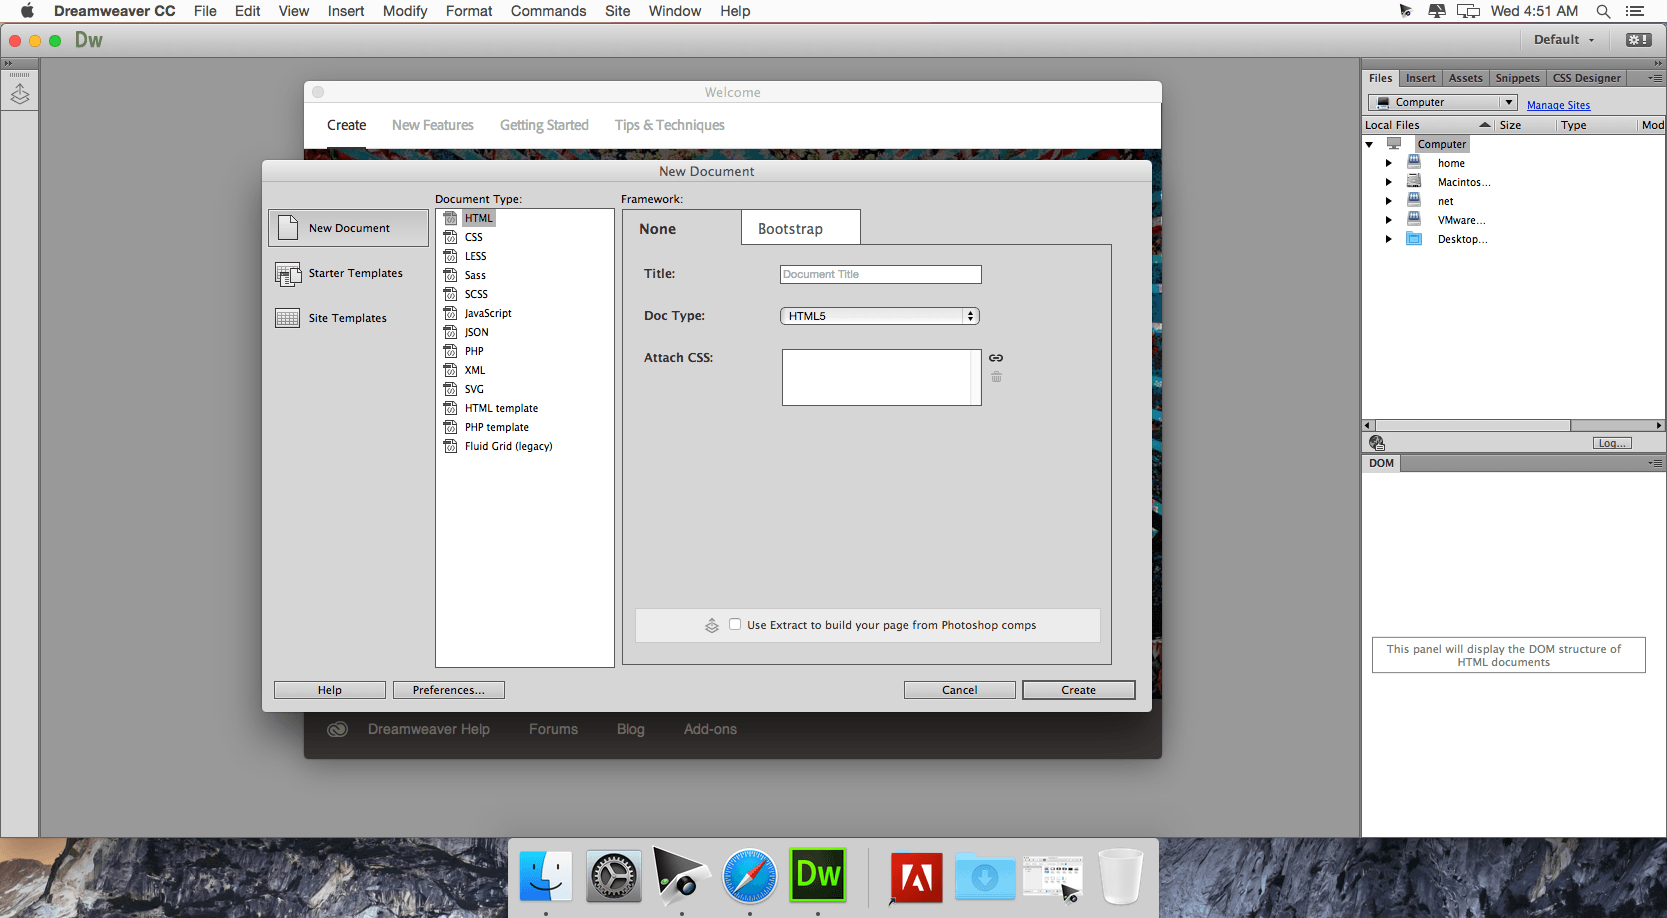 dreamweaver cc 2015 for mac free download full version